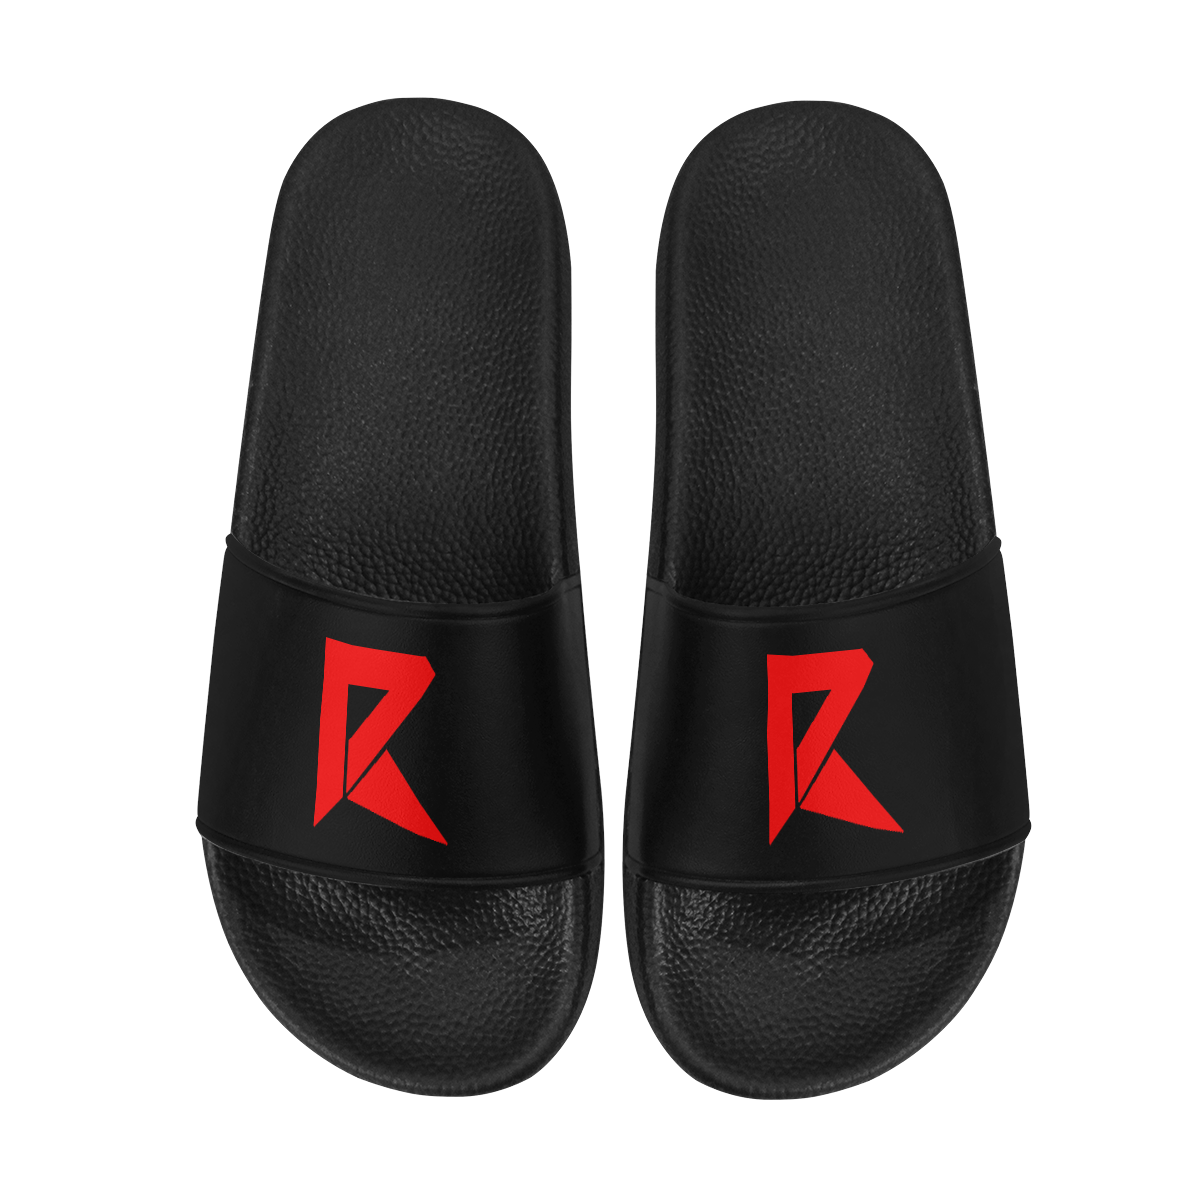 Black & Red Slide Men's Slide Sandals (Model 057)